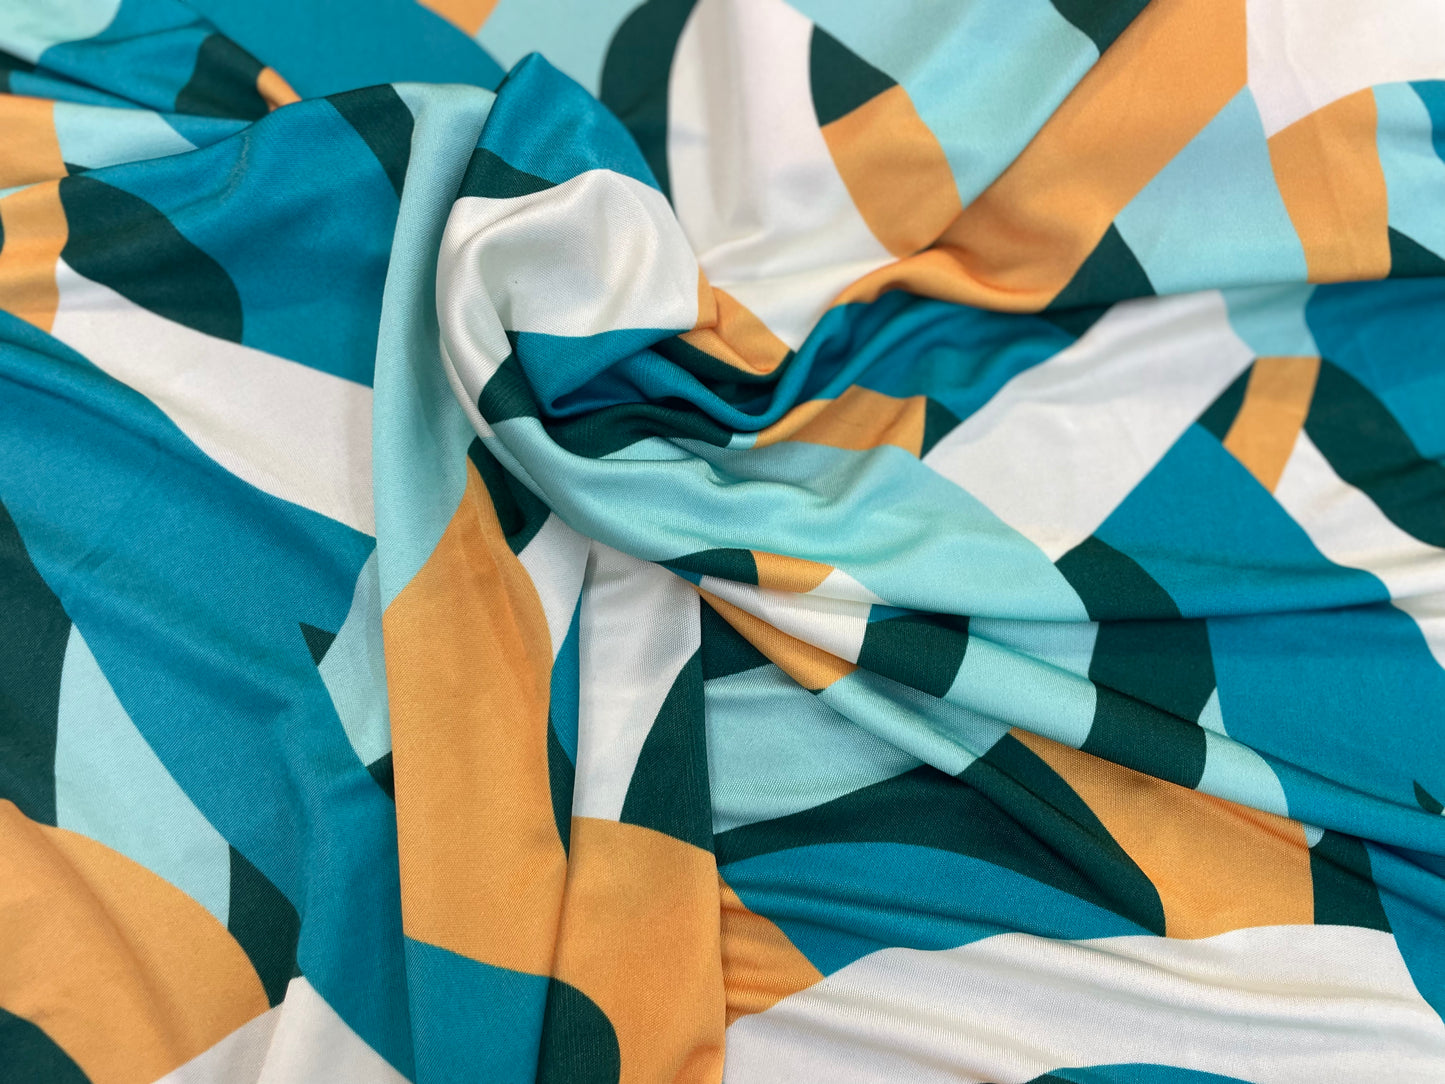 Abstract Swirl Print Rayon Jersey - Blue, Yellow, Teal, White & Orange